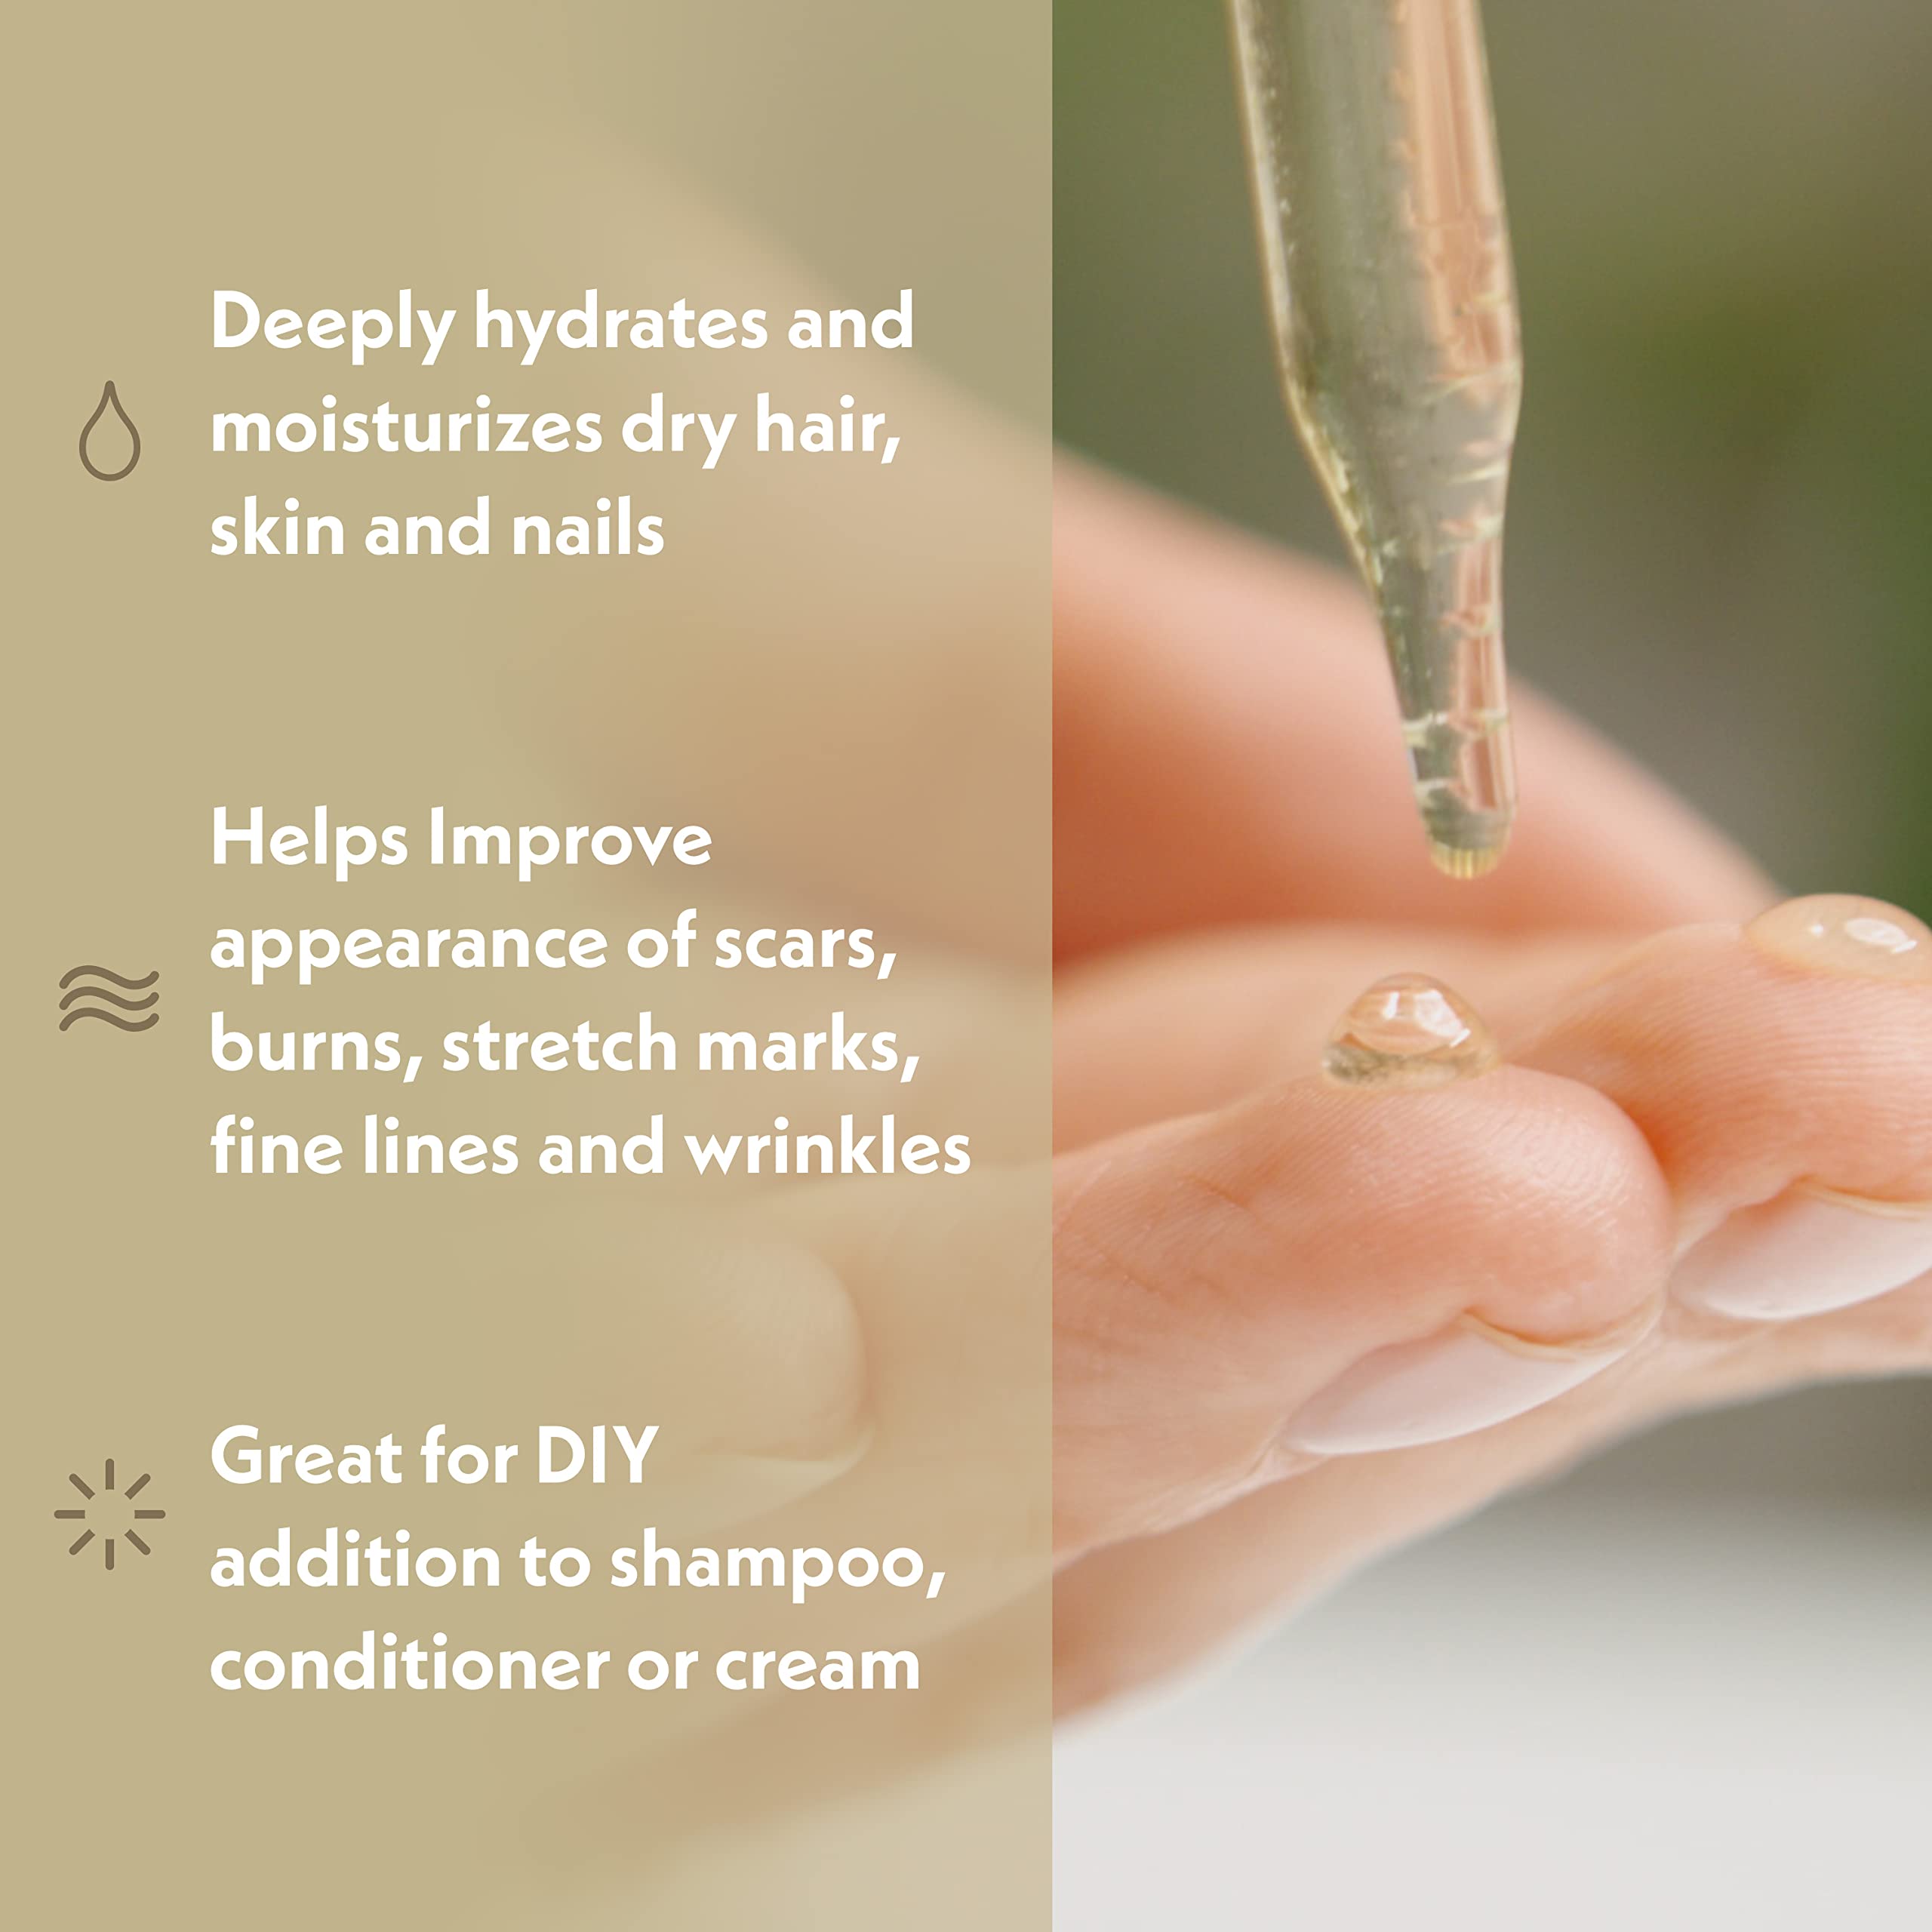 Eve Hansen Organic Argan Oil (4oz) | Pure Argan Oil for Hair, Skin and Nails | Carrier Oil, Face Moisturizer, Body Oil, Dry Scalp Treatment and Hair Oil for Dry Hair and Damage